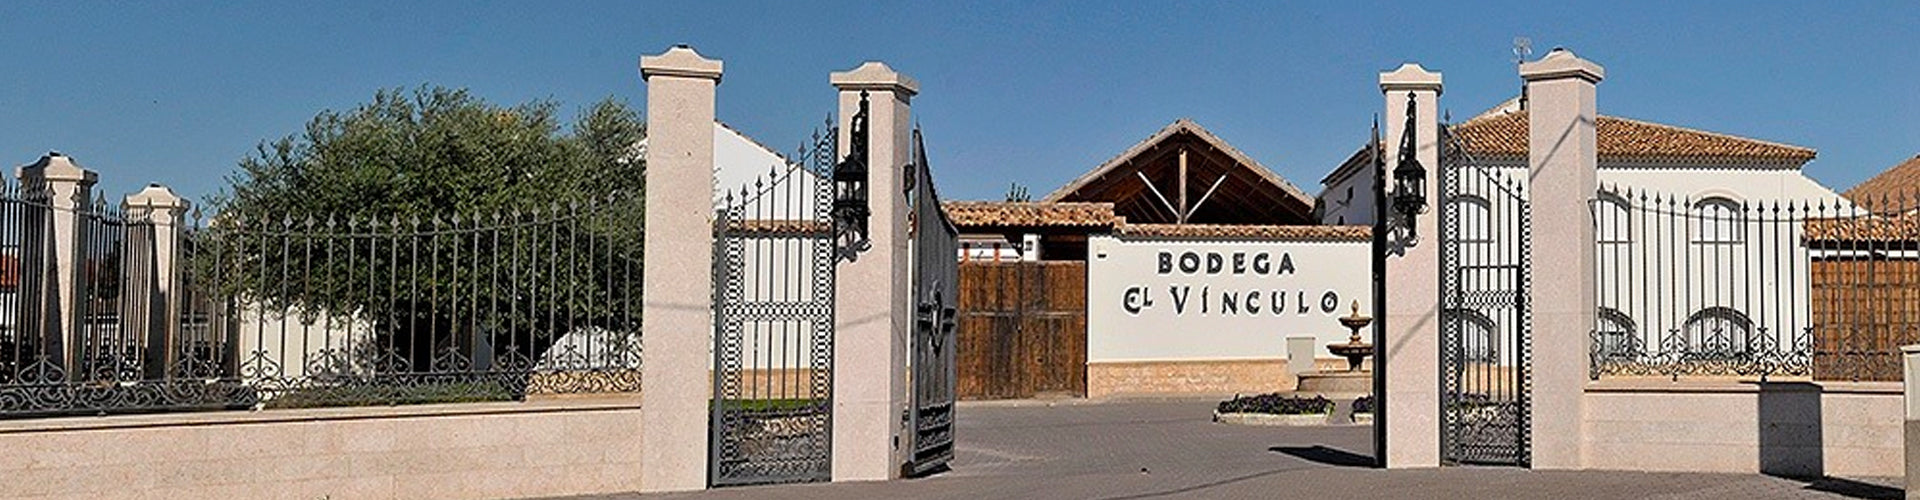 The Fernández Rivera Family Winery 'El Vínculo' Building in La Mancha, Spain